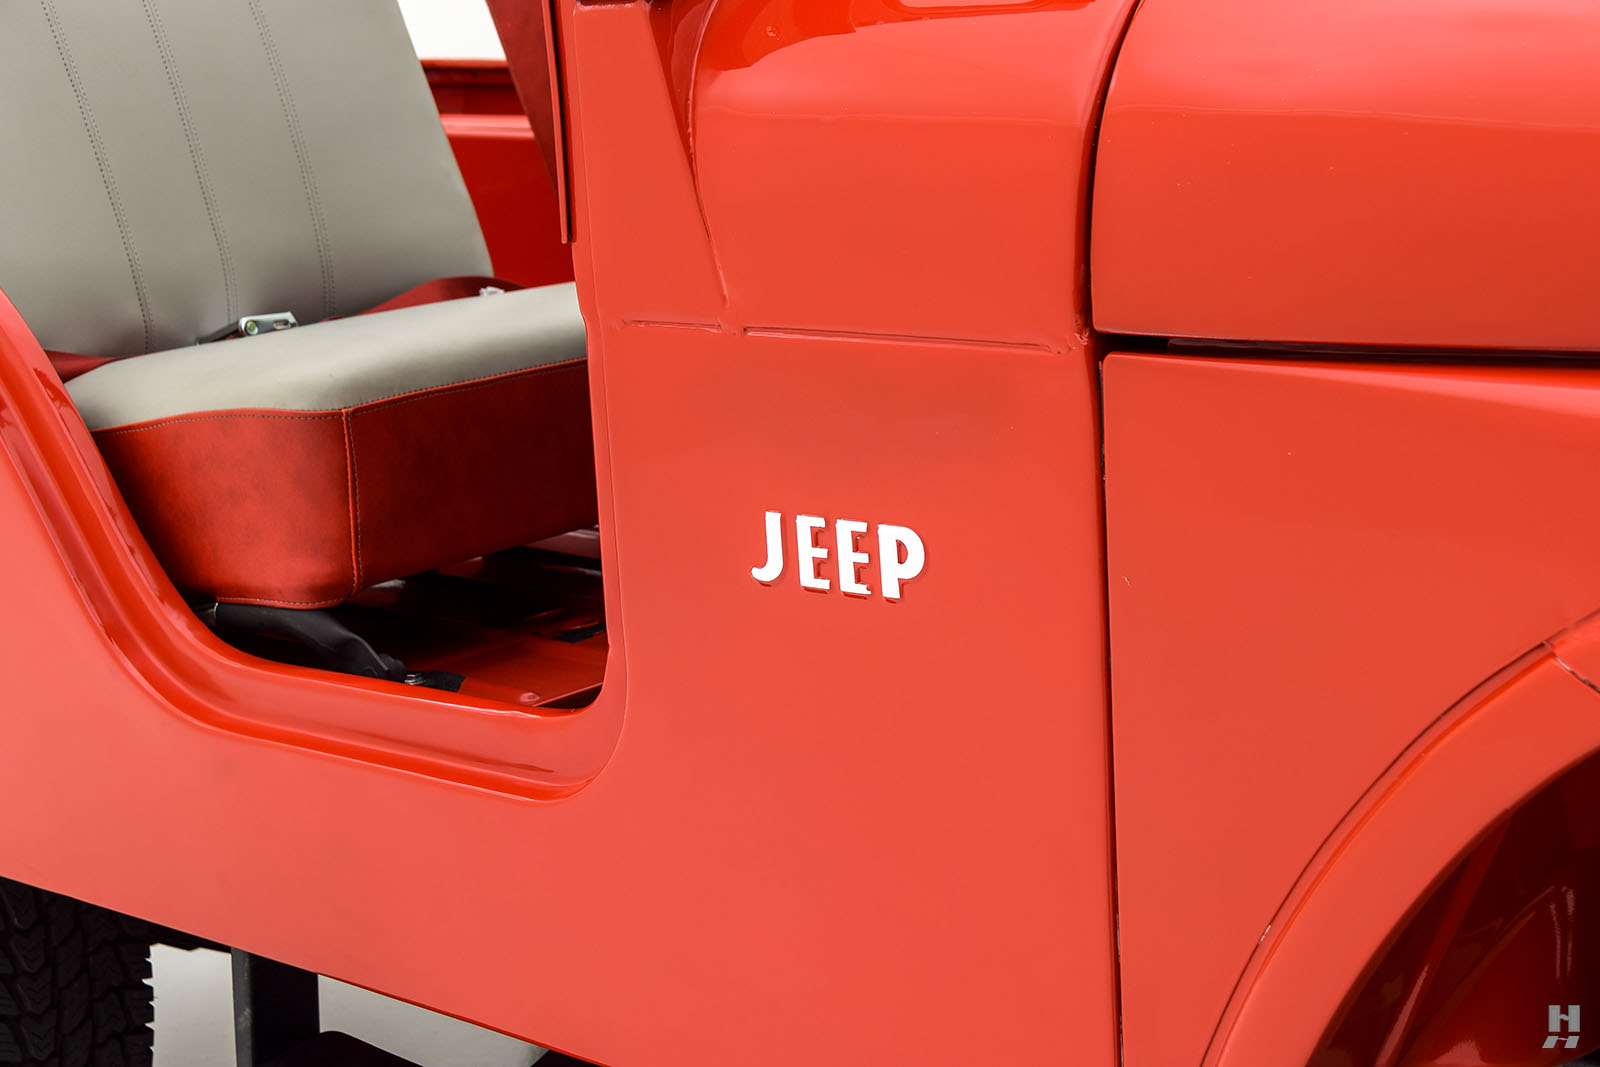 1966 jeep cj-5a tuxedo park